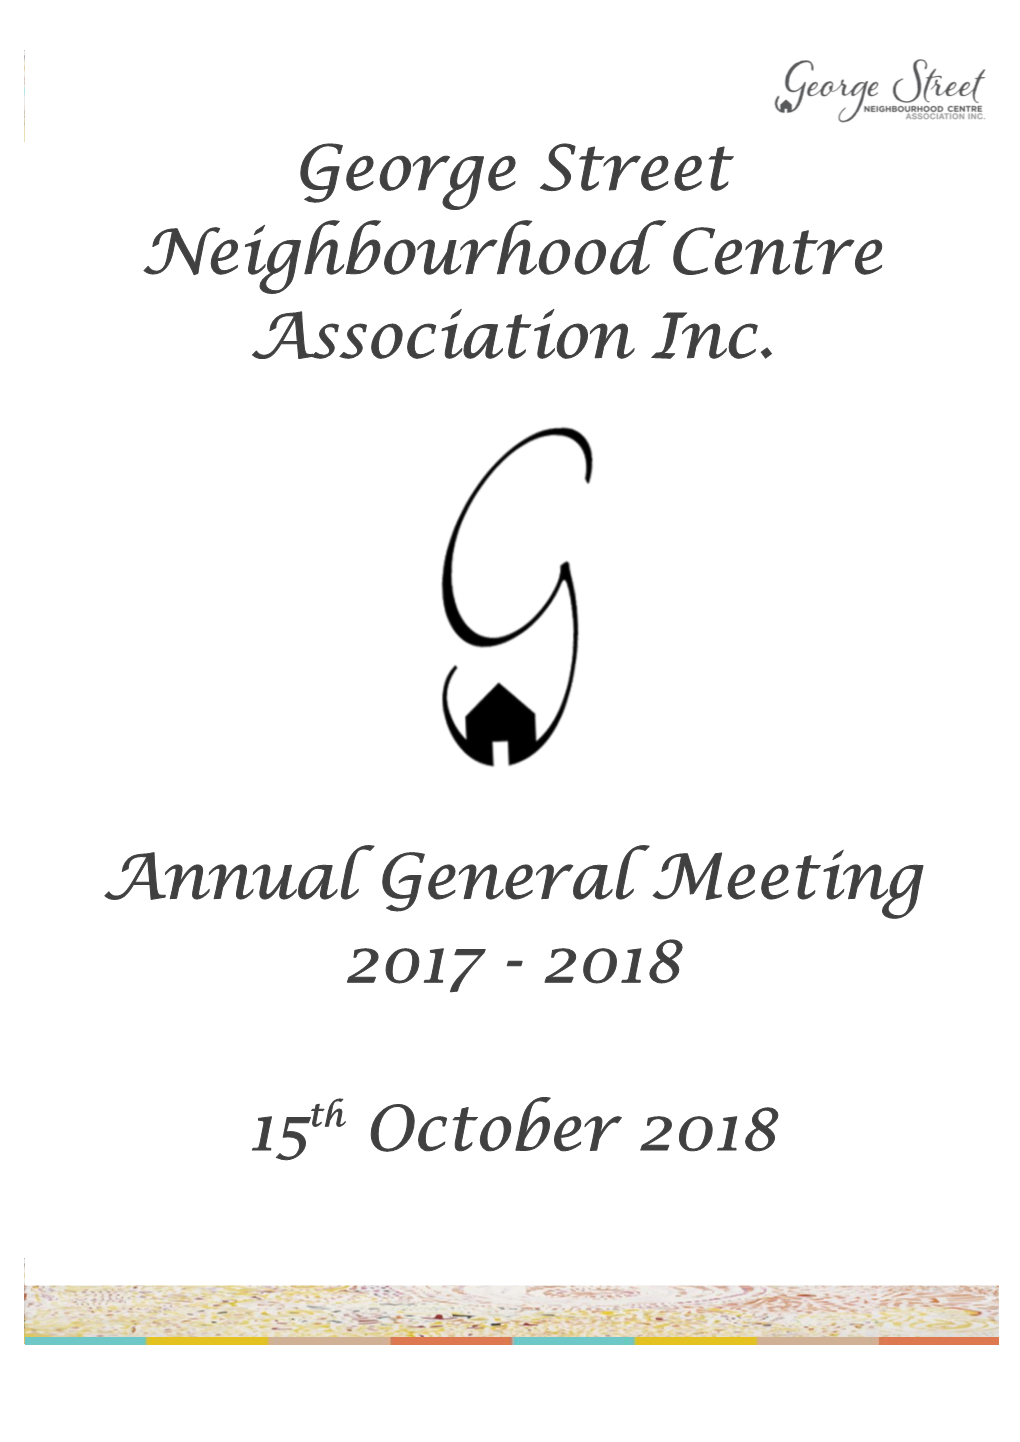 George Street Neighbourhood Centre Association Inc. Annual General Meeting 2017-2018